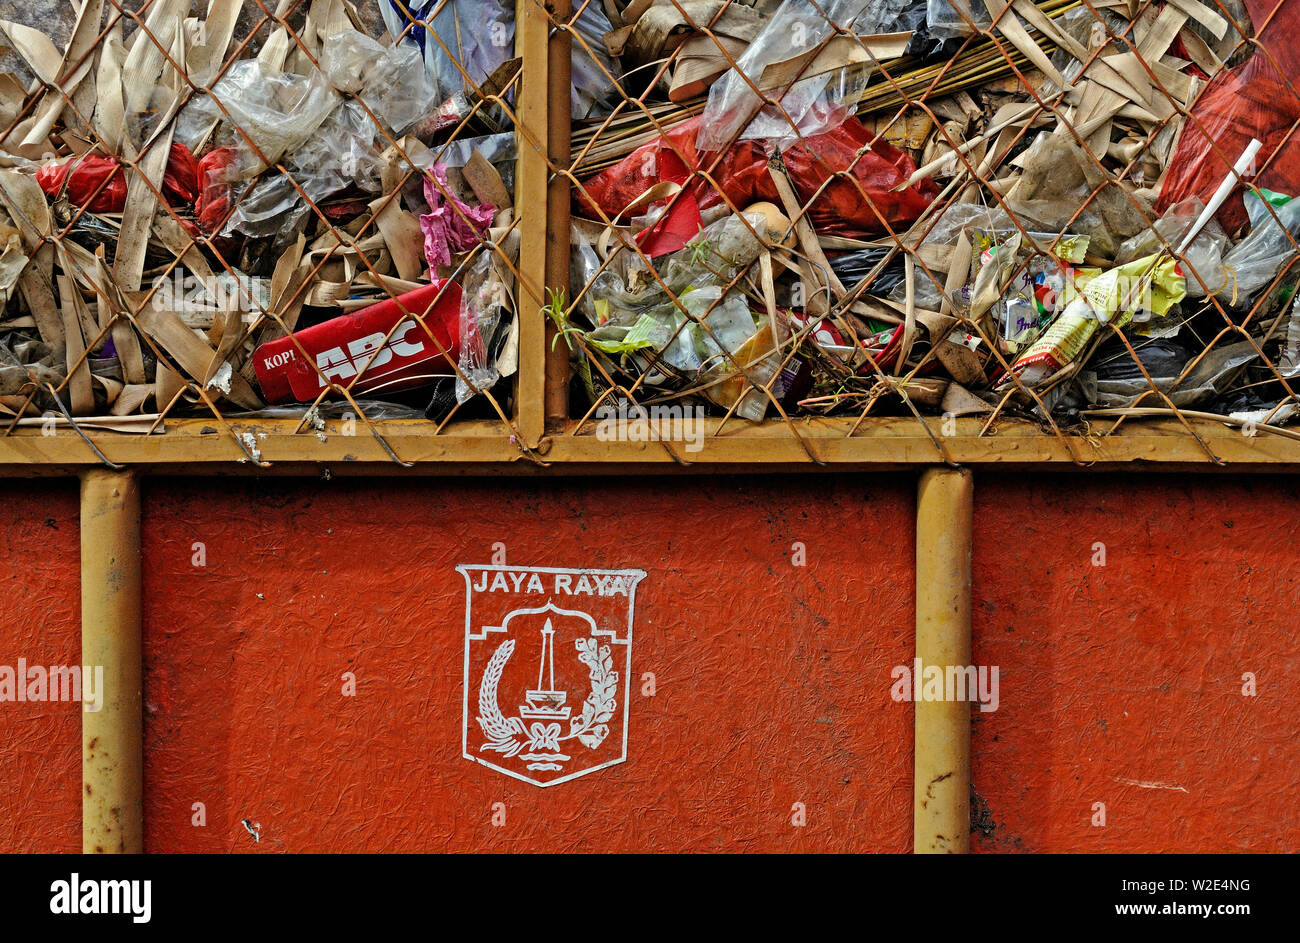 Jakarta, dki Jakarta/Indonesien - Mai 17, 2010: Abfälle in einer kommunalen Müllwagen in menteng Wohngegend Stockfoto